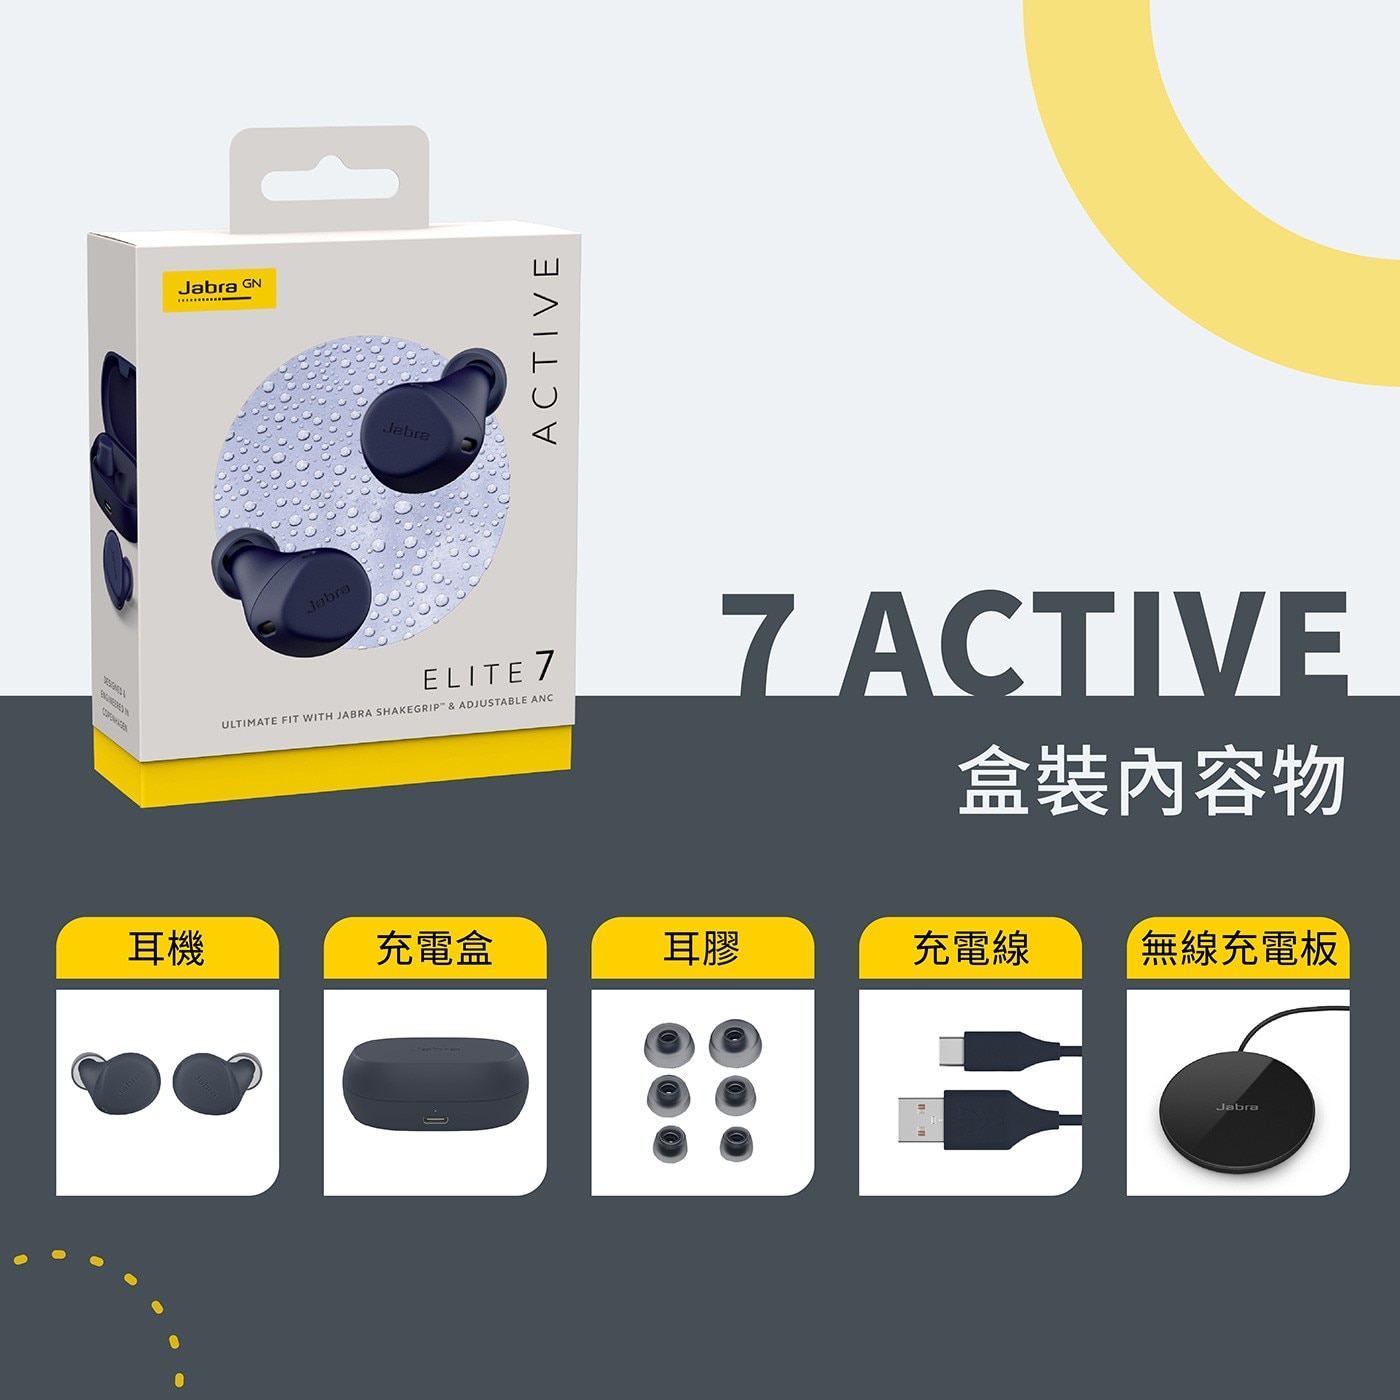 Jabra Elite 7 Active ANC降噪真無線藍牙耳機，盒裝內容有充電盒、耳機、耳膠、充電線。